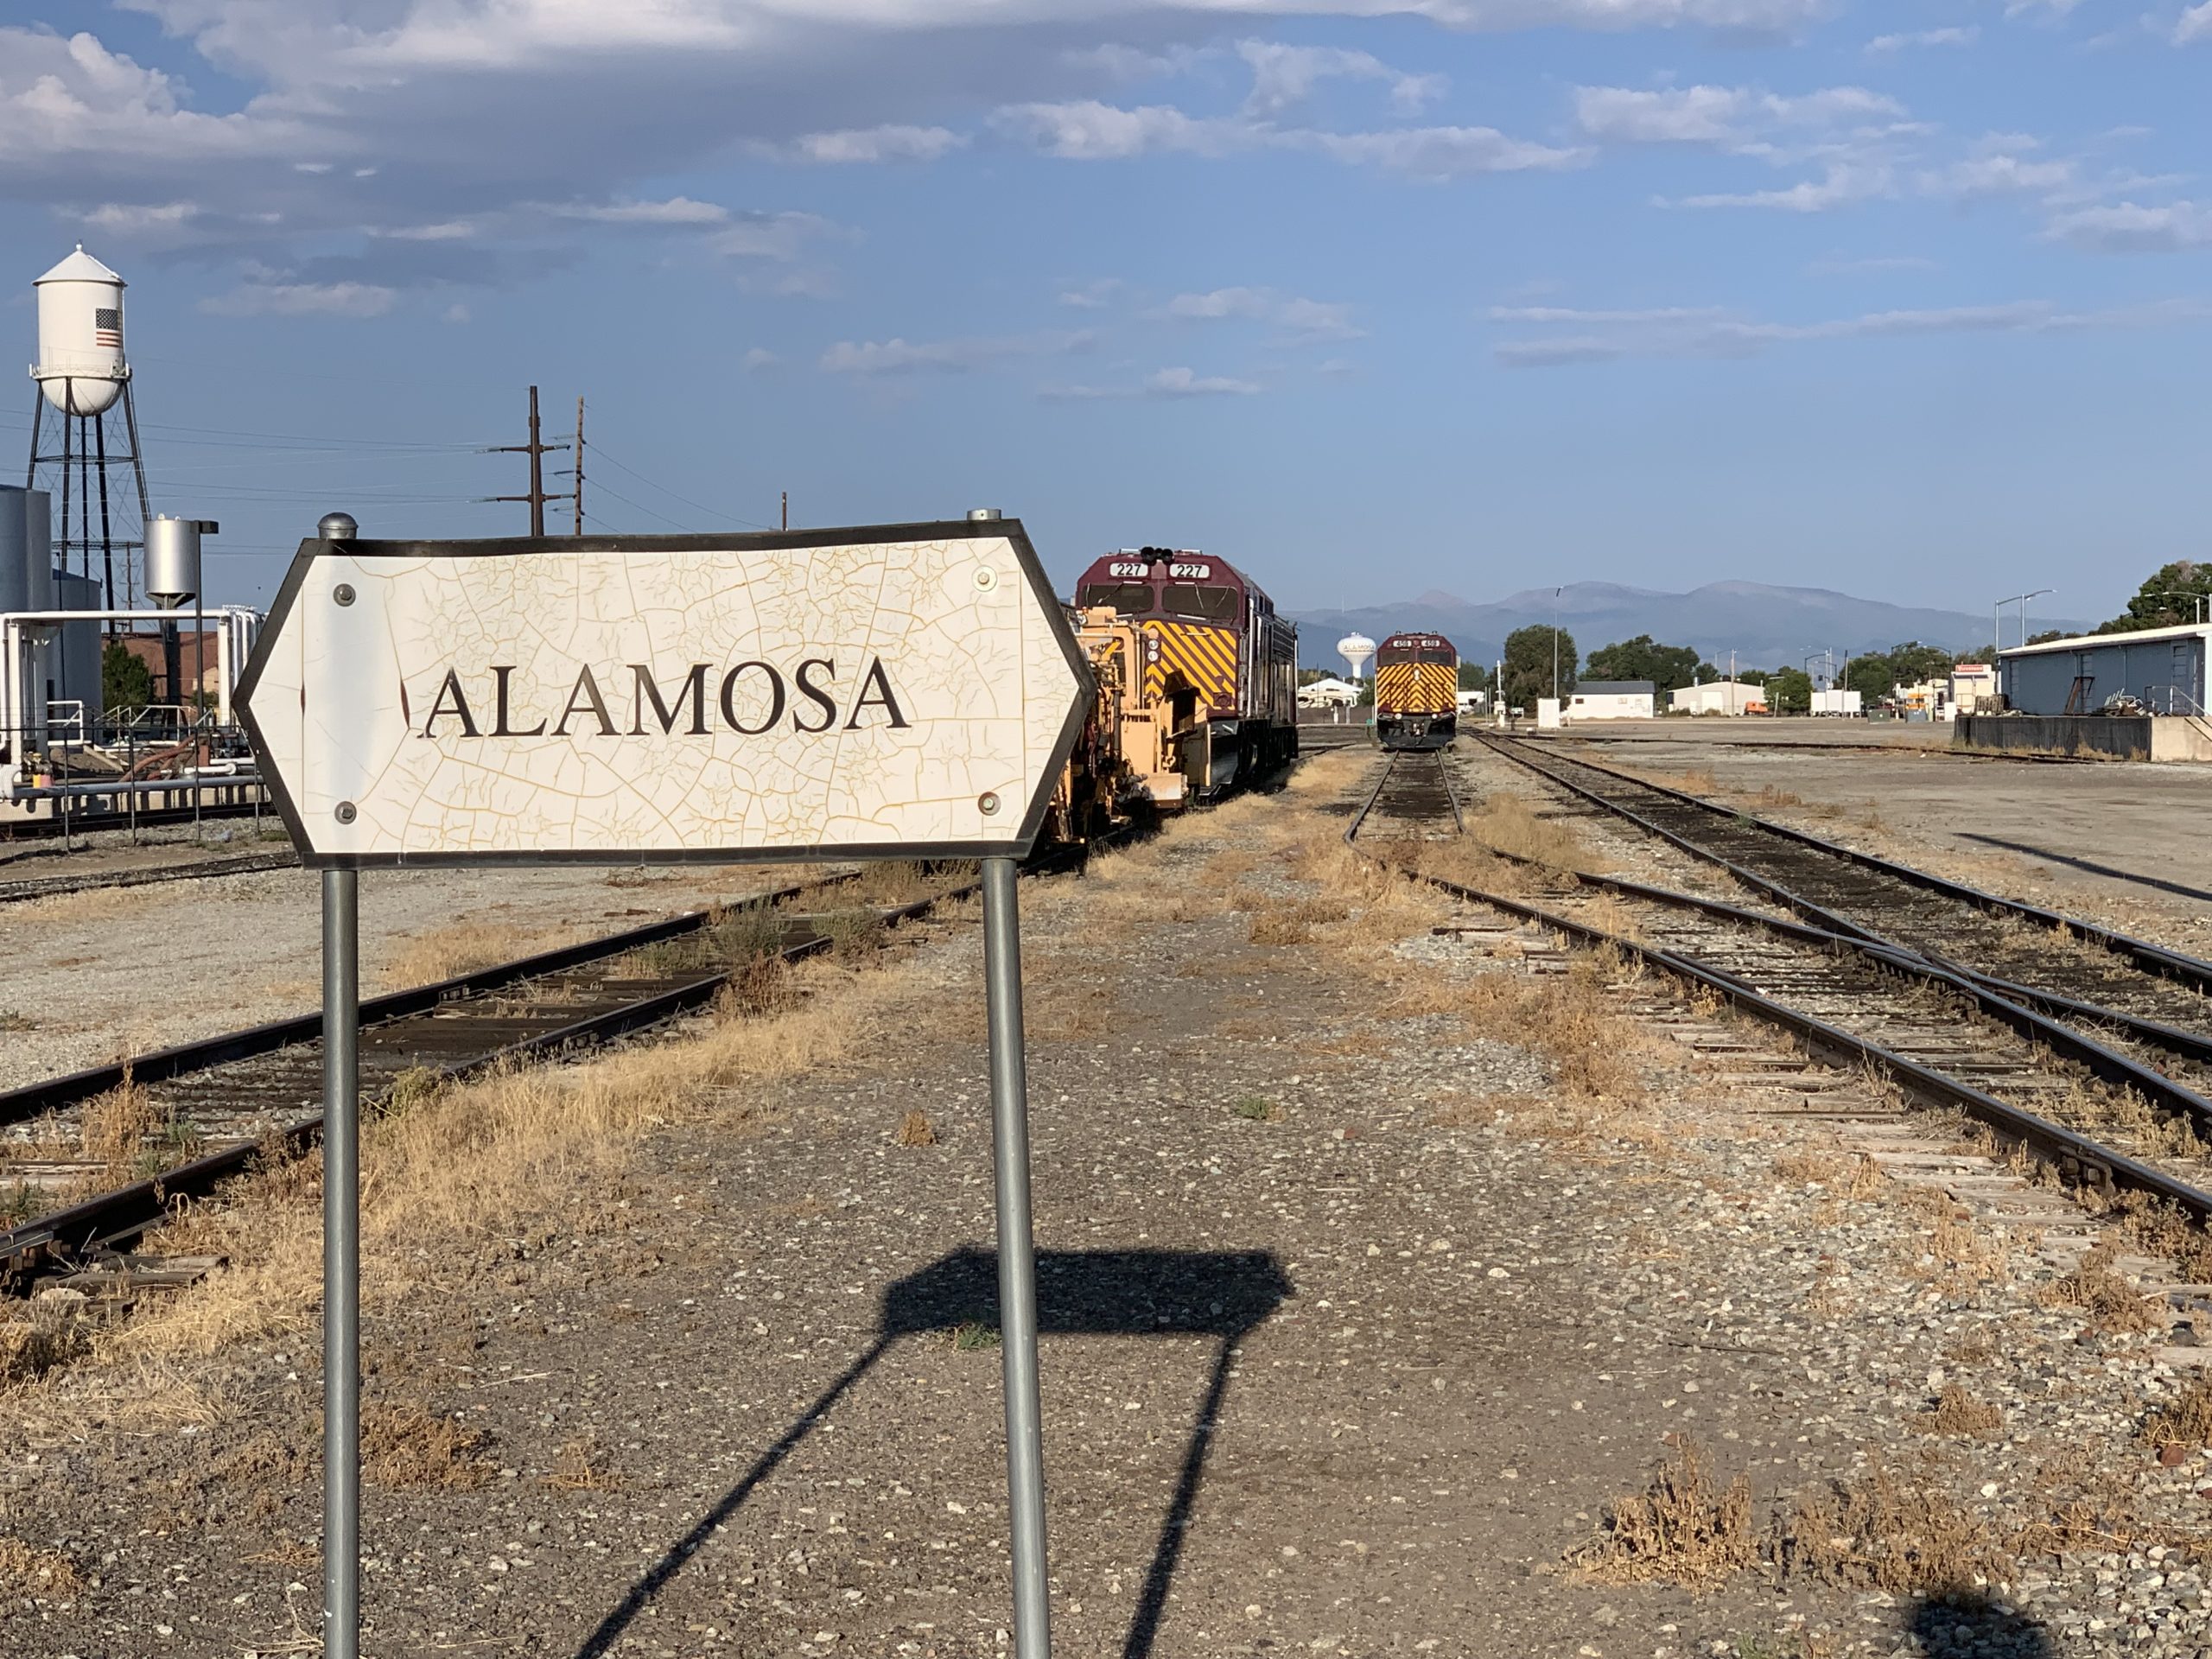 Train tracks in Alamosa, CO